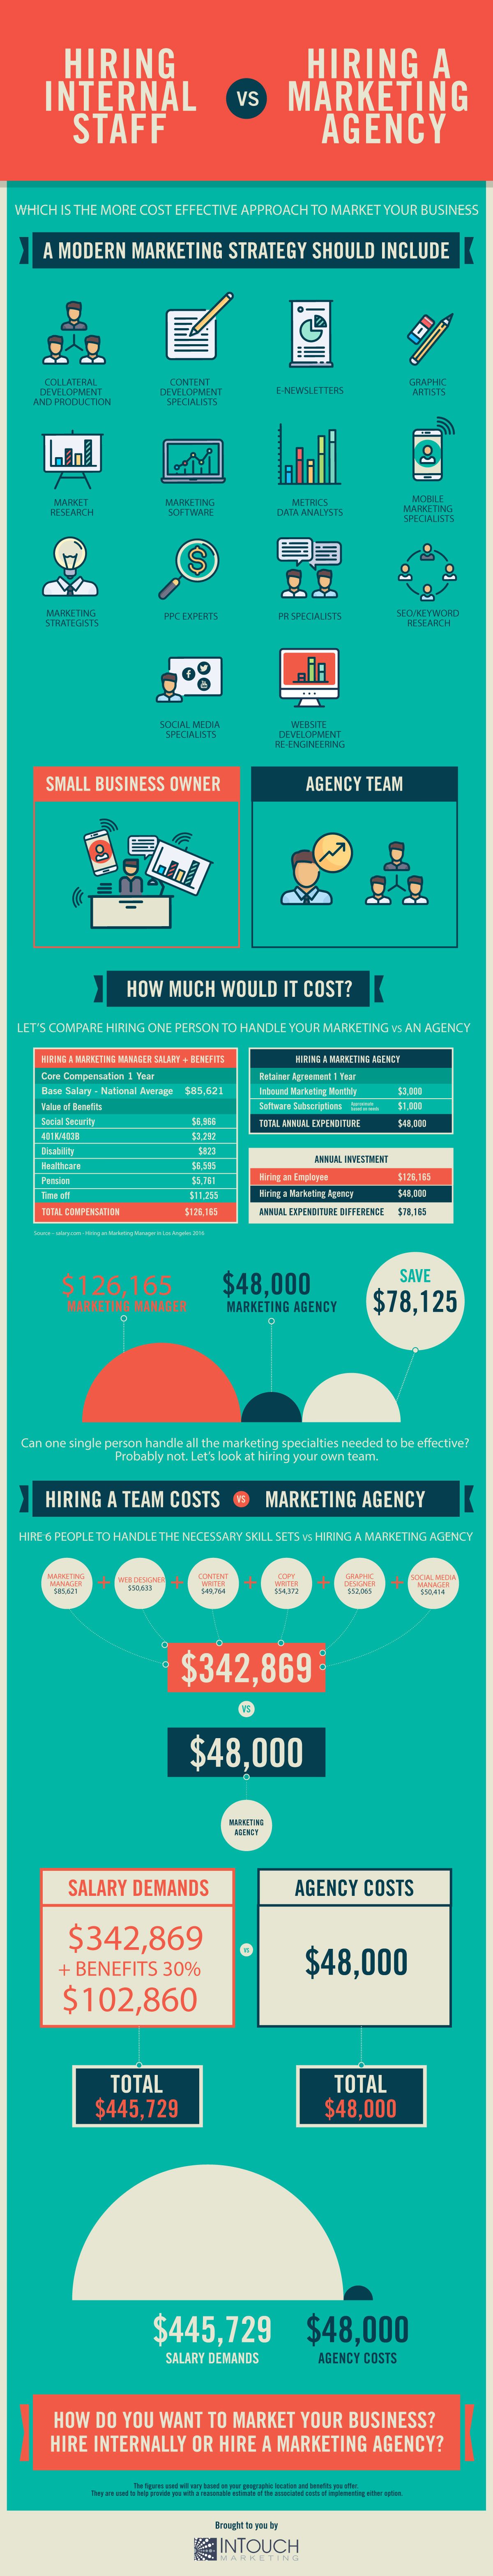 Hiring Internal Staff Vs Hiring A Marketing Agency Infographic Marketing Agency Infographic Marketing Marketing